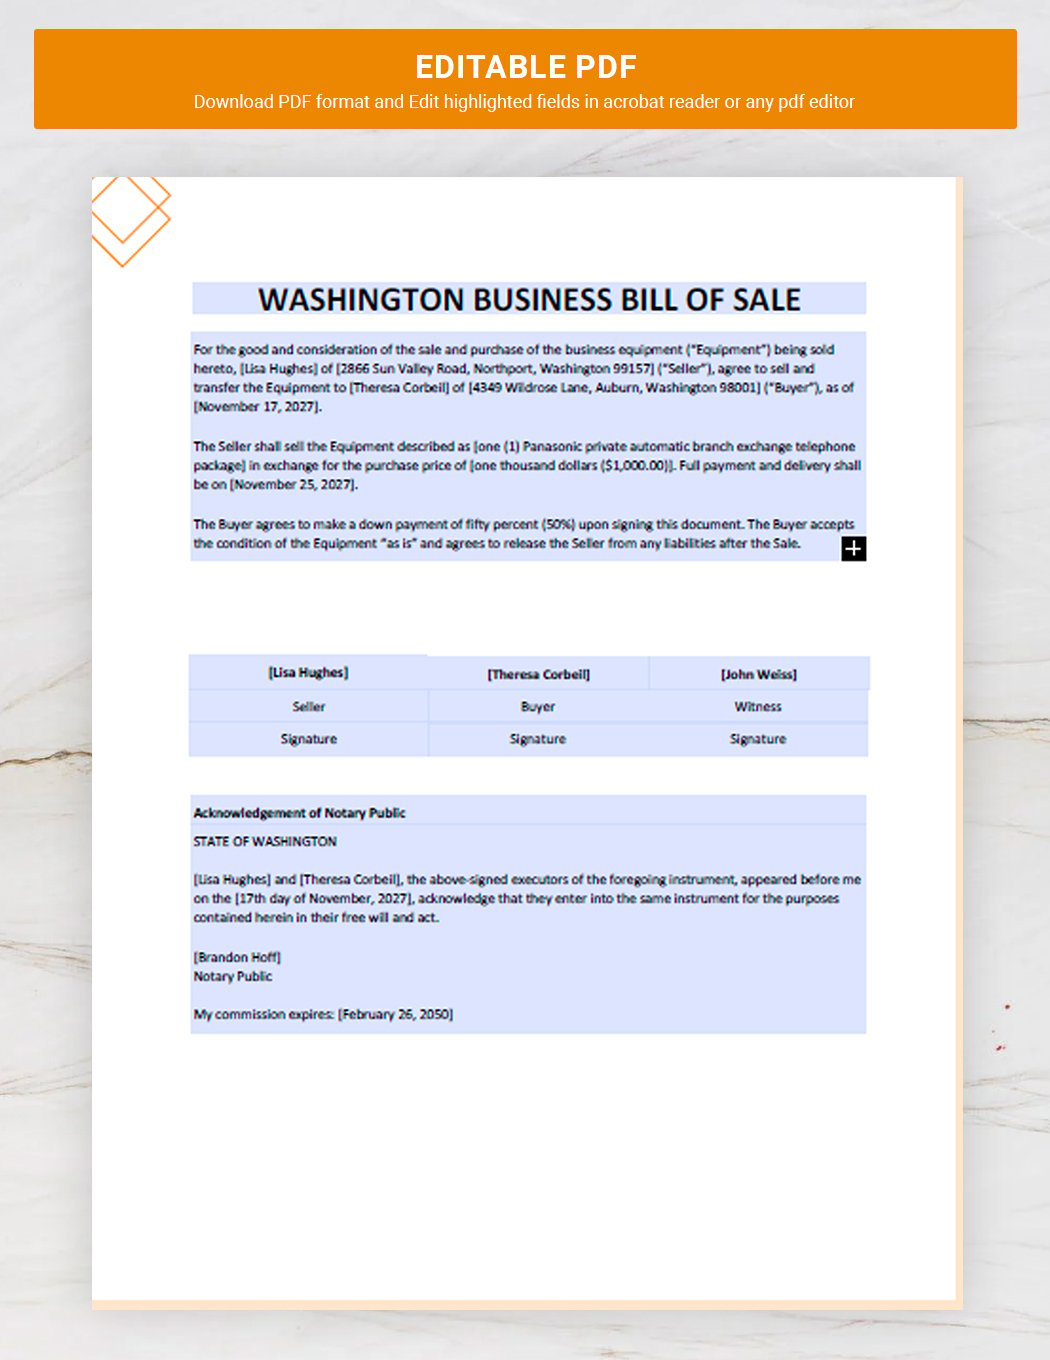 Washington Business Bill of Sale Template